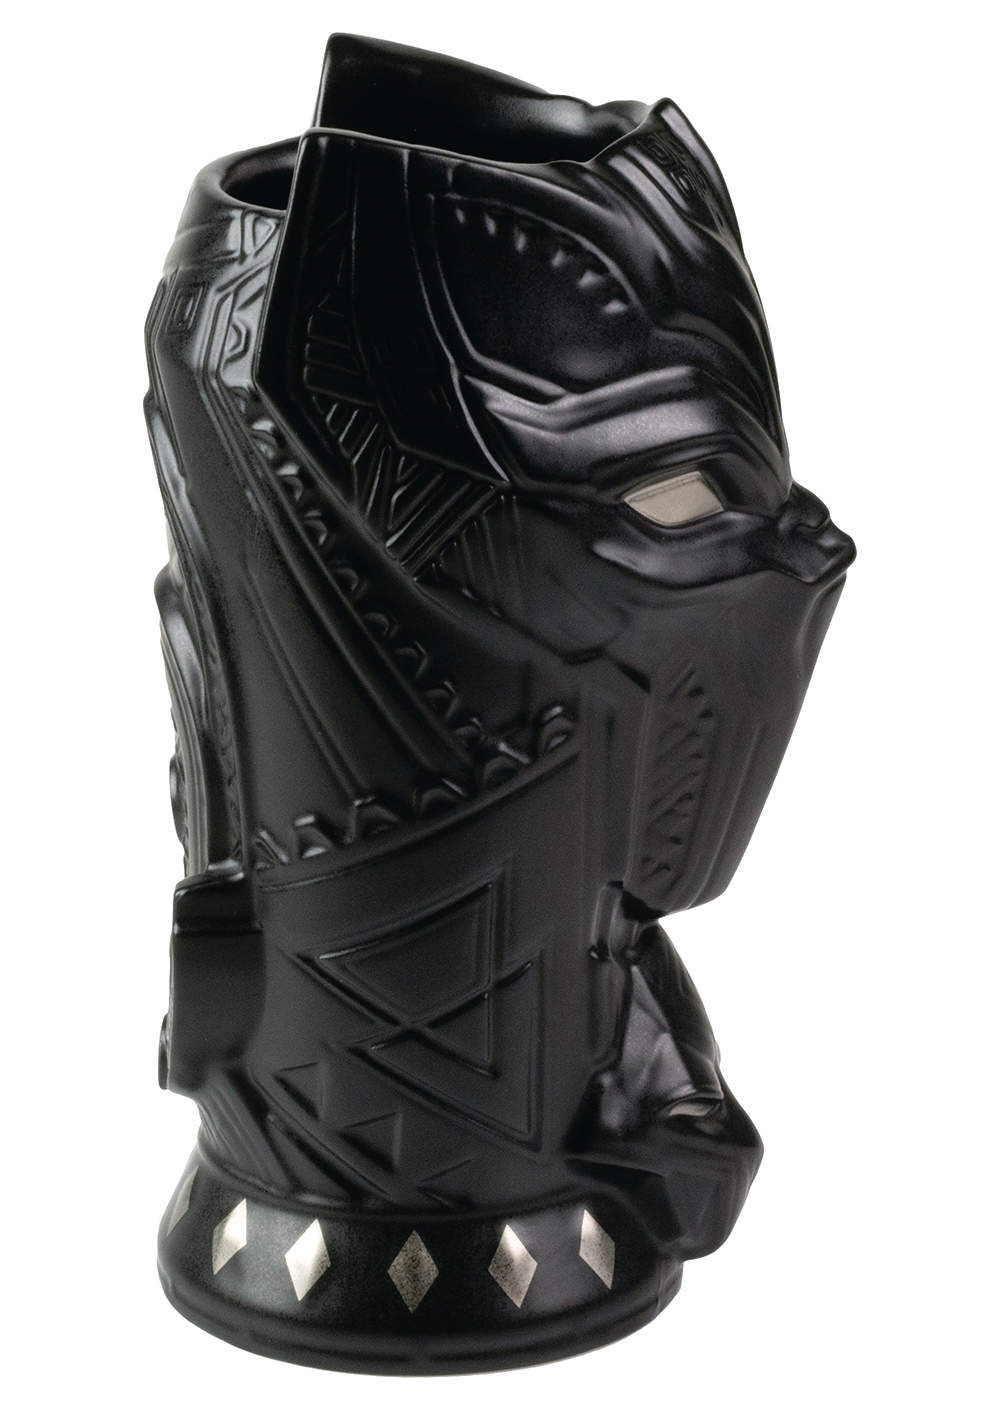 Caneca Tiki Mondo Pantera Negra (Black Panther) em Estilo Moai